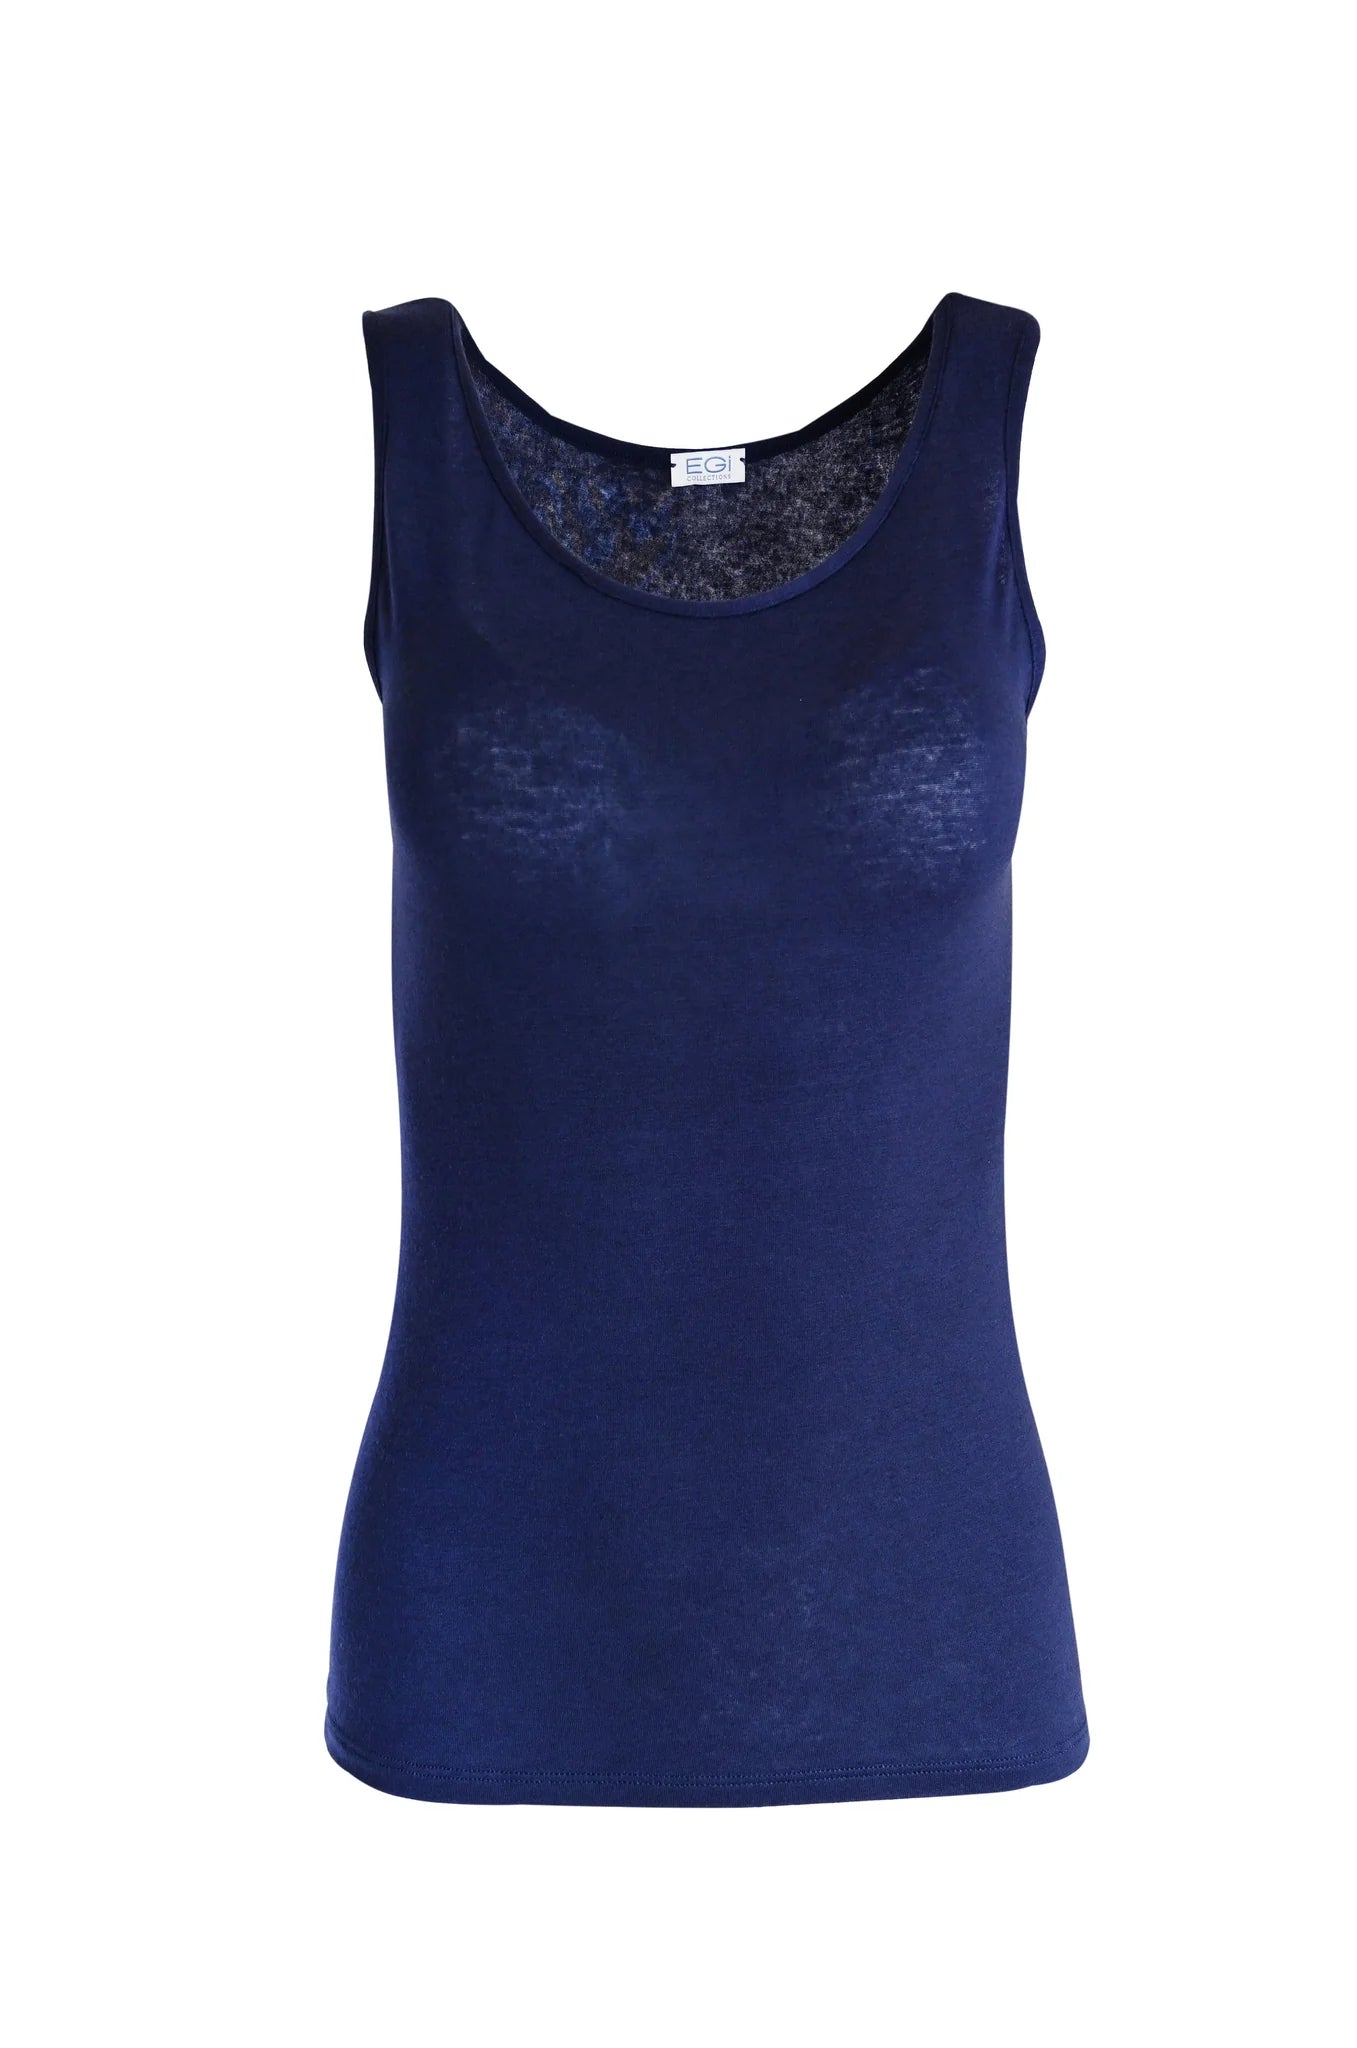 Camiseta de tirantes ultraligera de Modal y Cashmere para mujer - Made in Italy - 5219